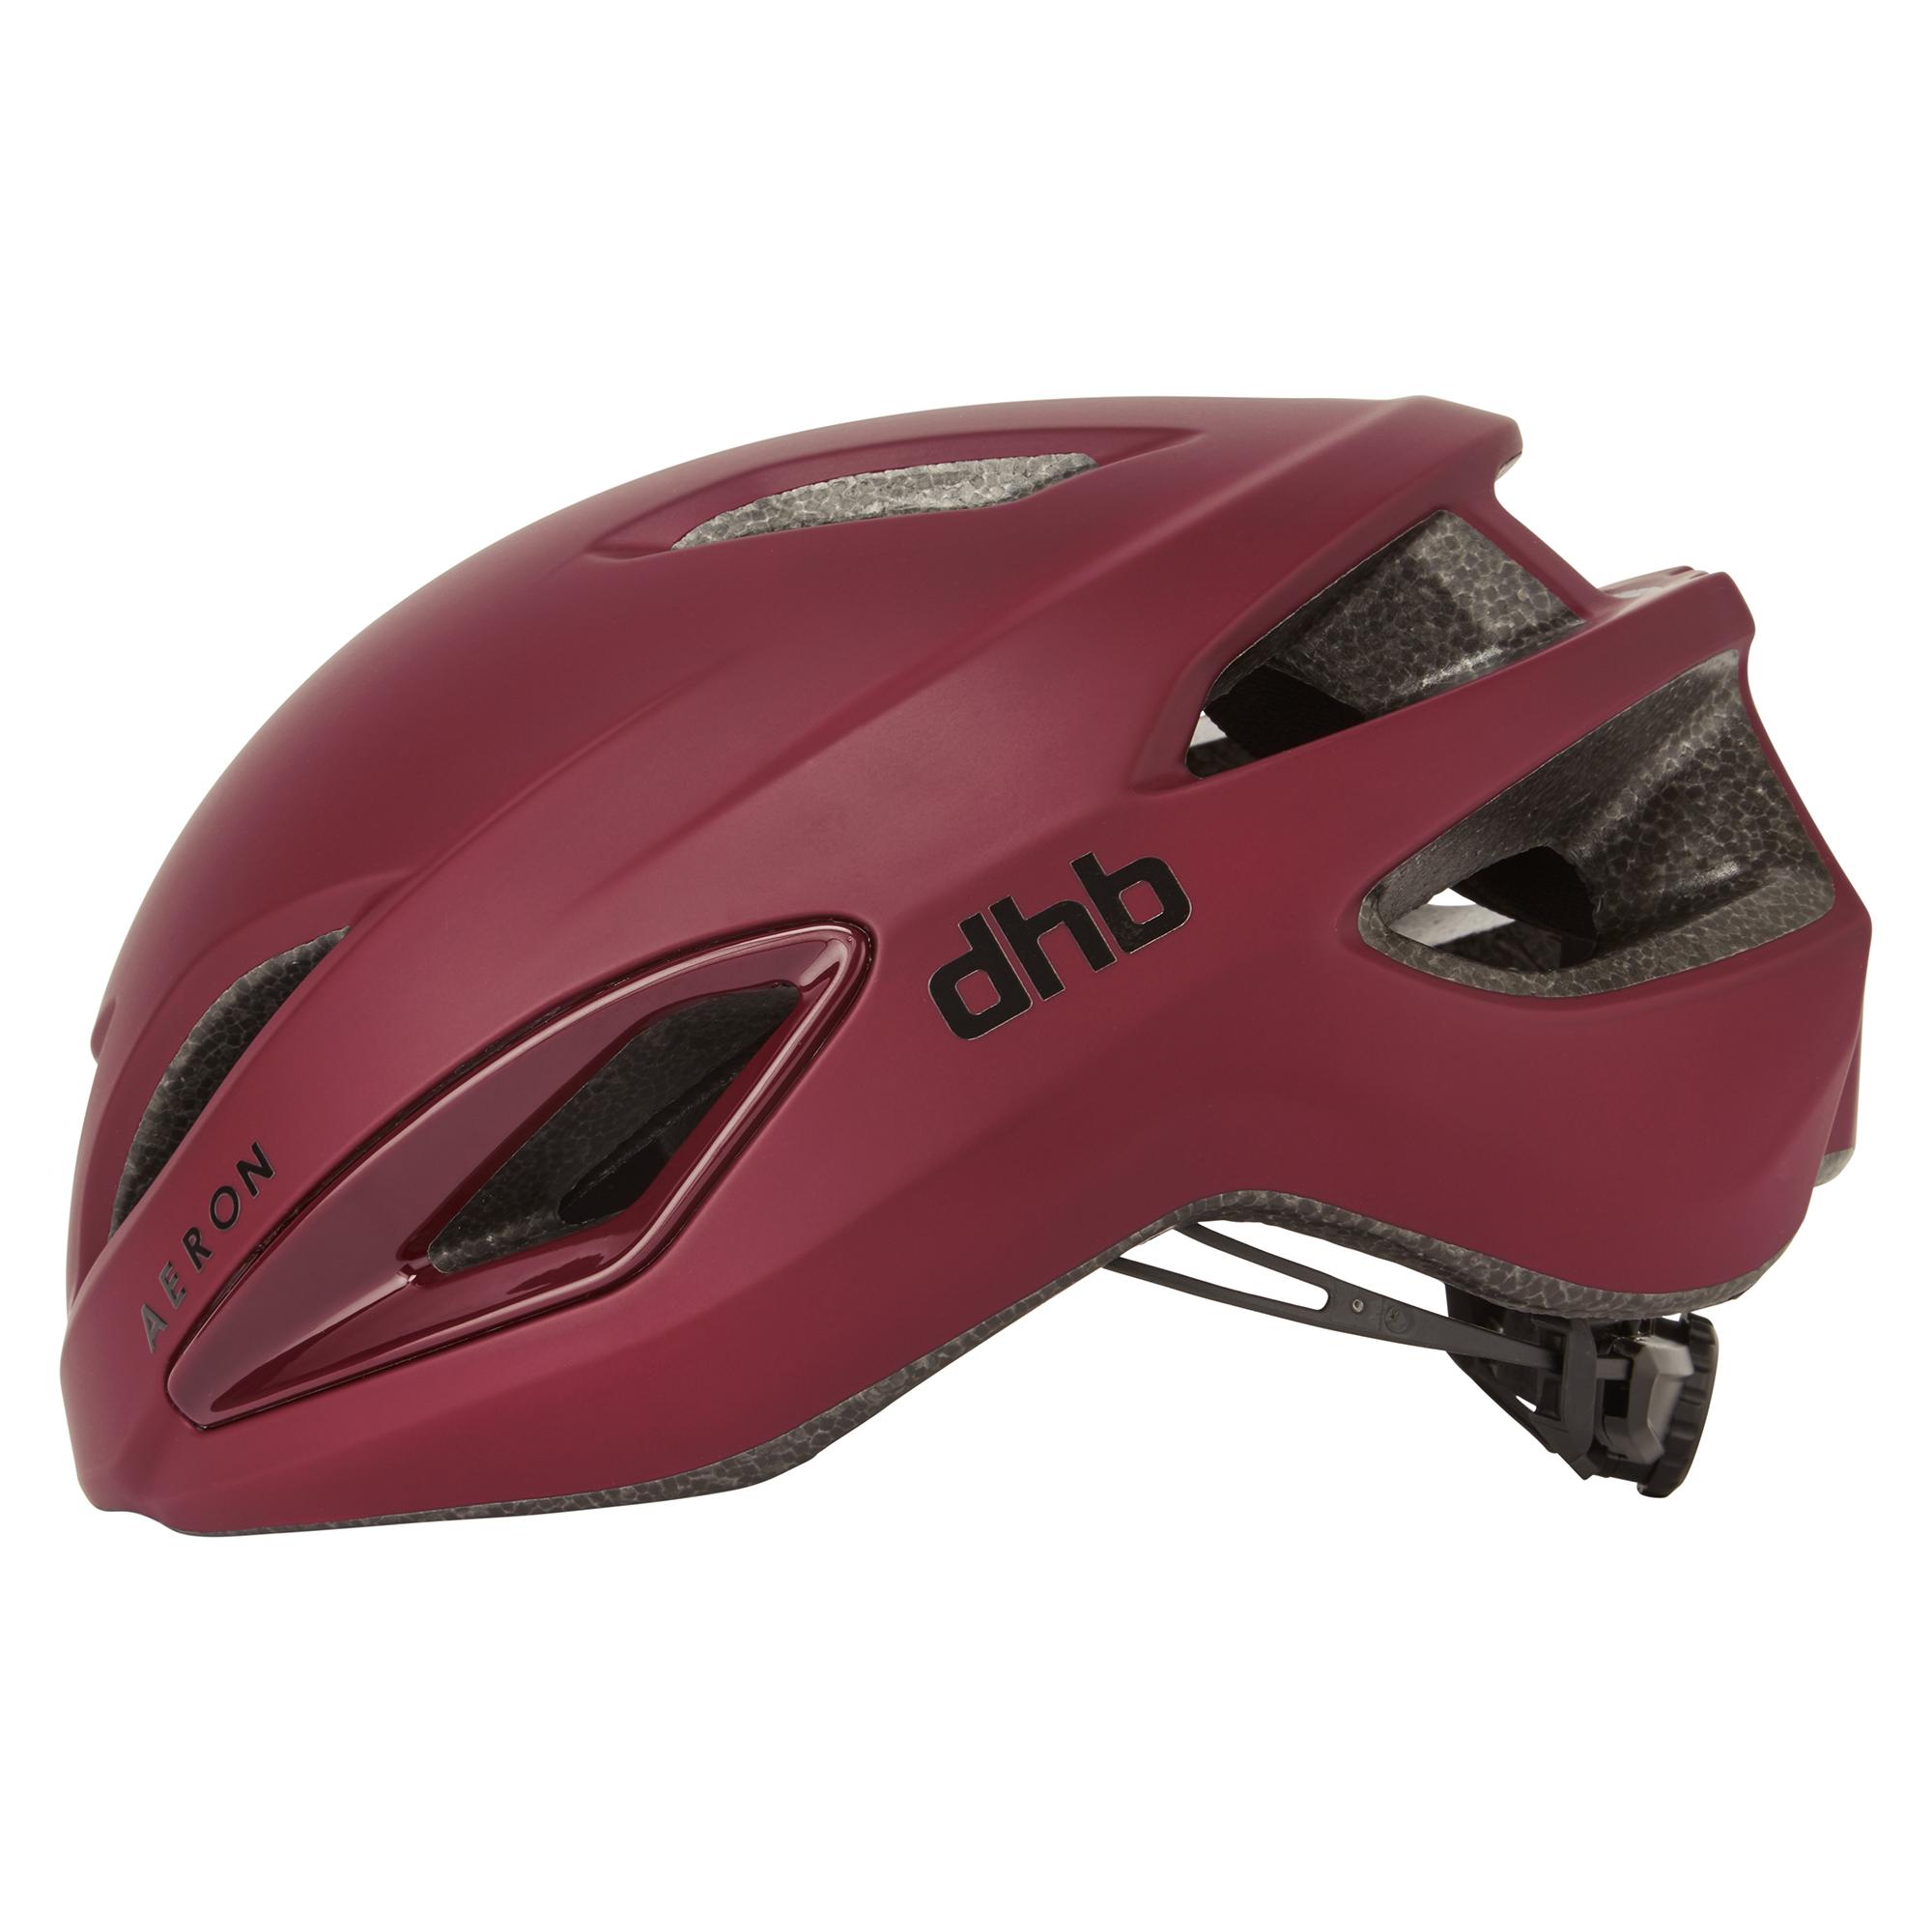 Dhb Aeron Helmet - Burgundy